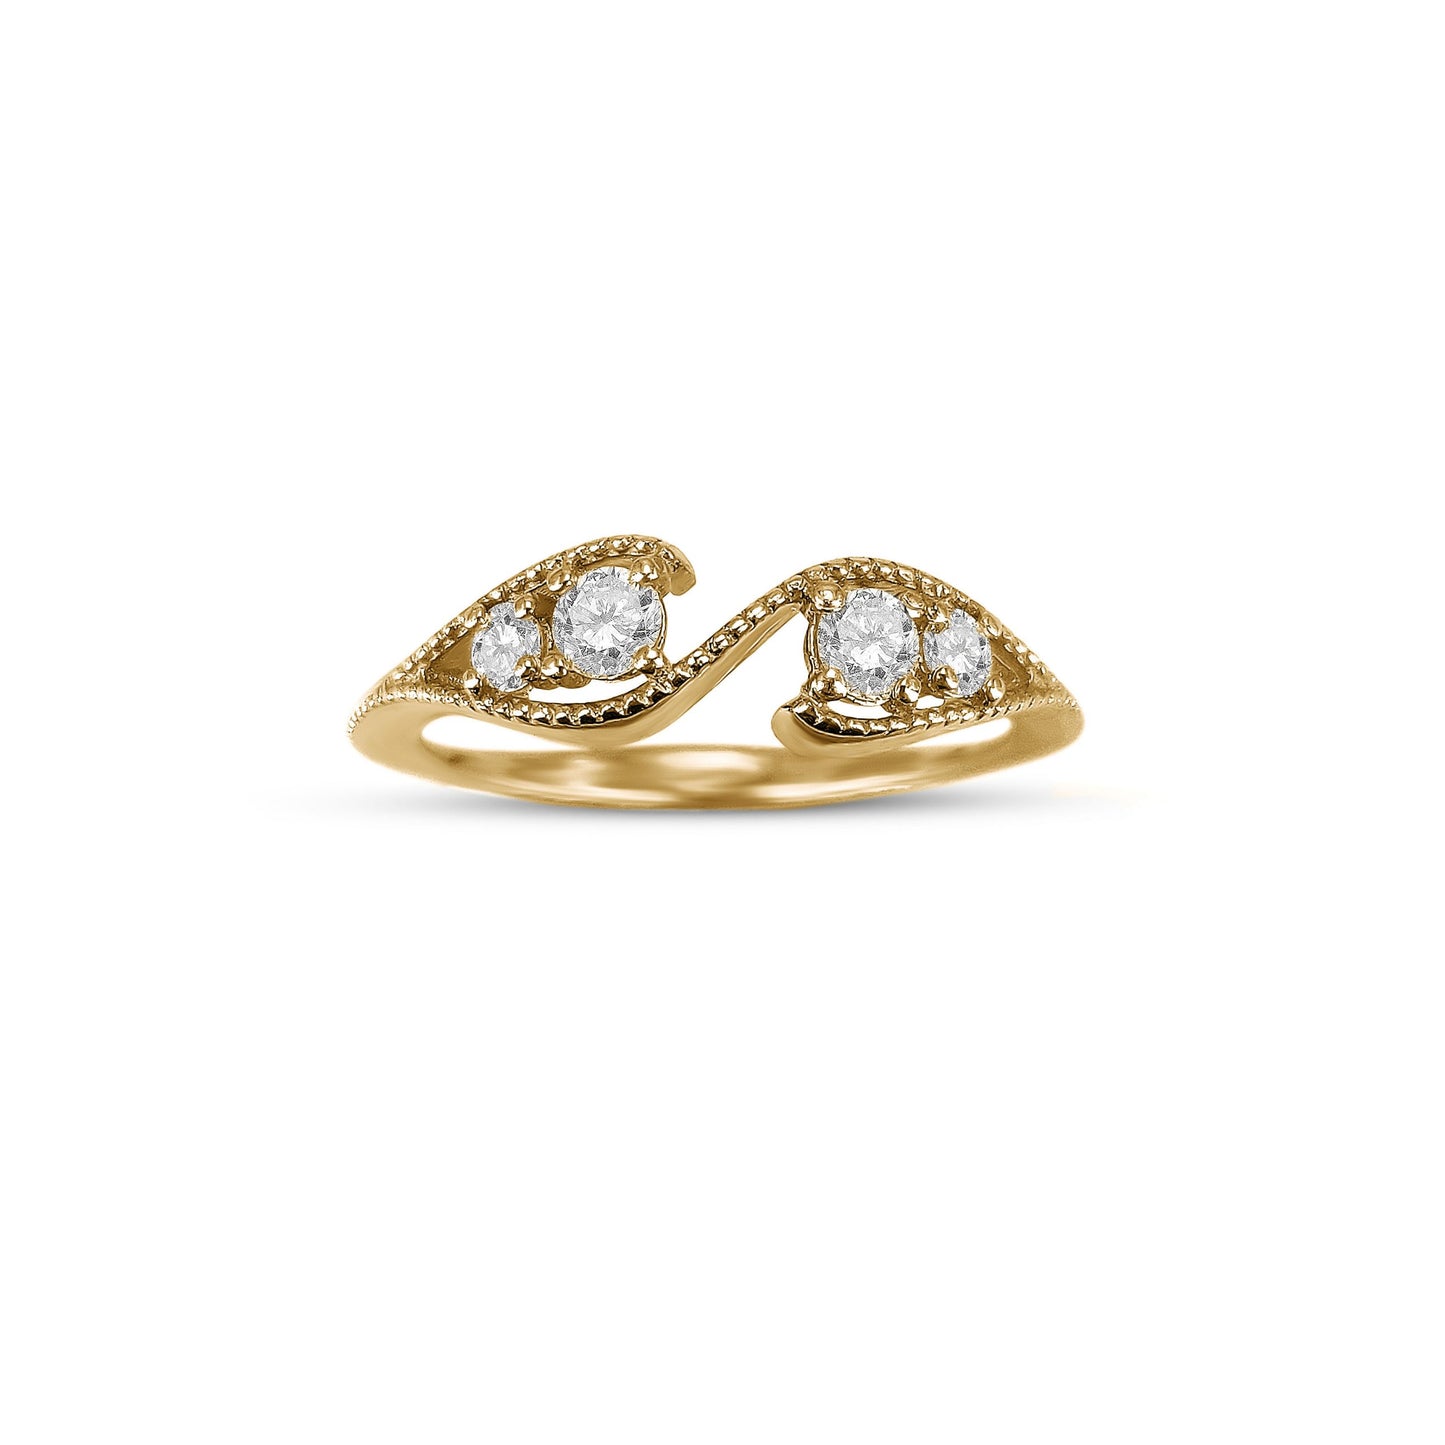 Amazing 0.10 SI2 Quality,Center Diamond , Total diamond wt. 0.30ct. 14K OR 18K Gold Bridal Engagement Wedding Anniversary Gift Ring